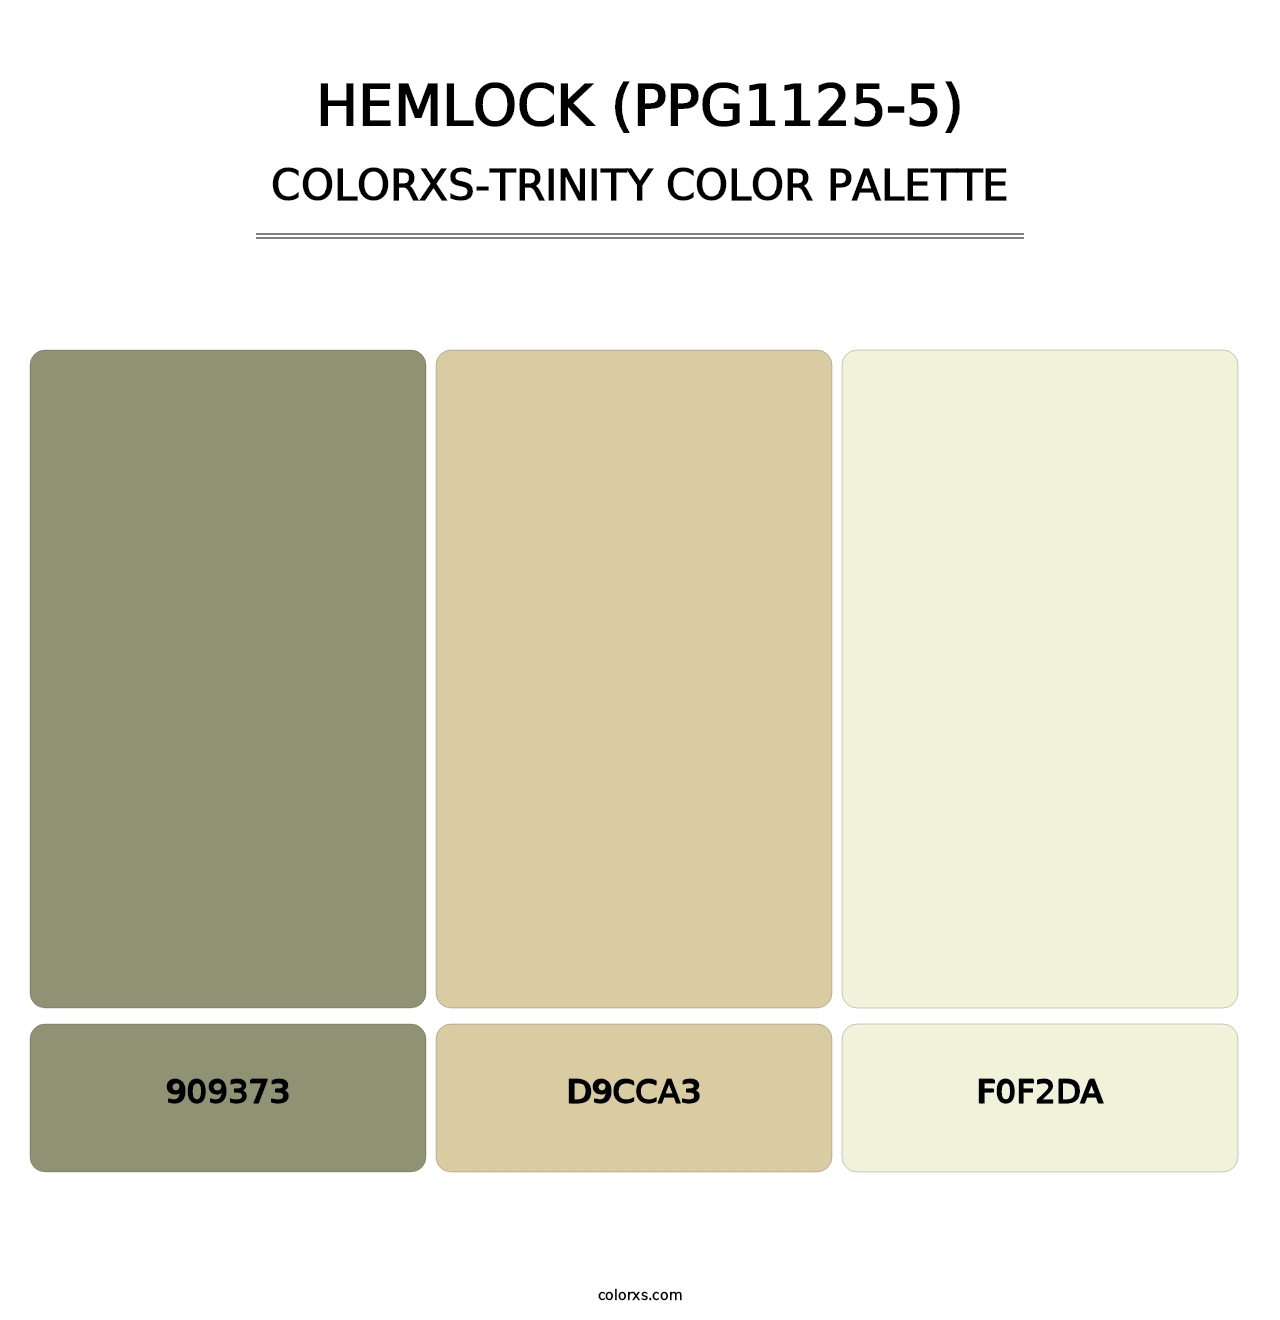 Hemlock (PPG1125-5) - Colorxs Trinity Palette